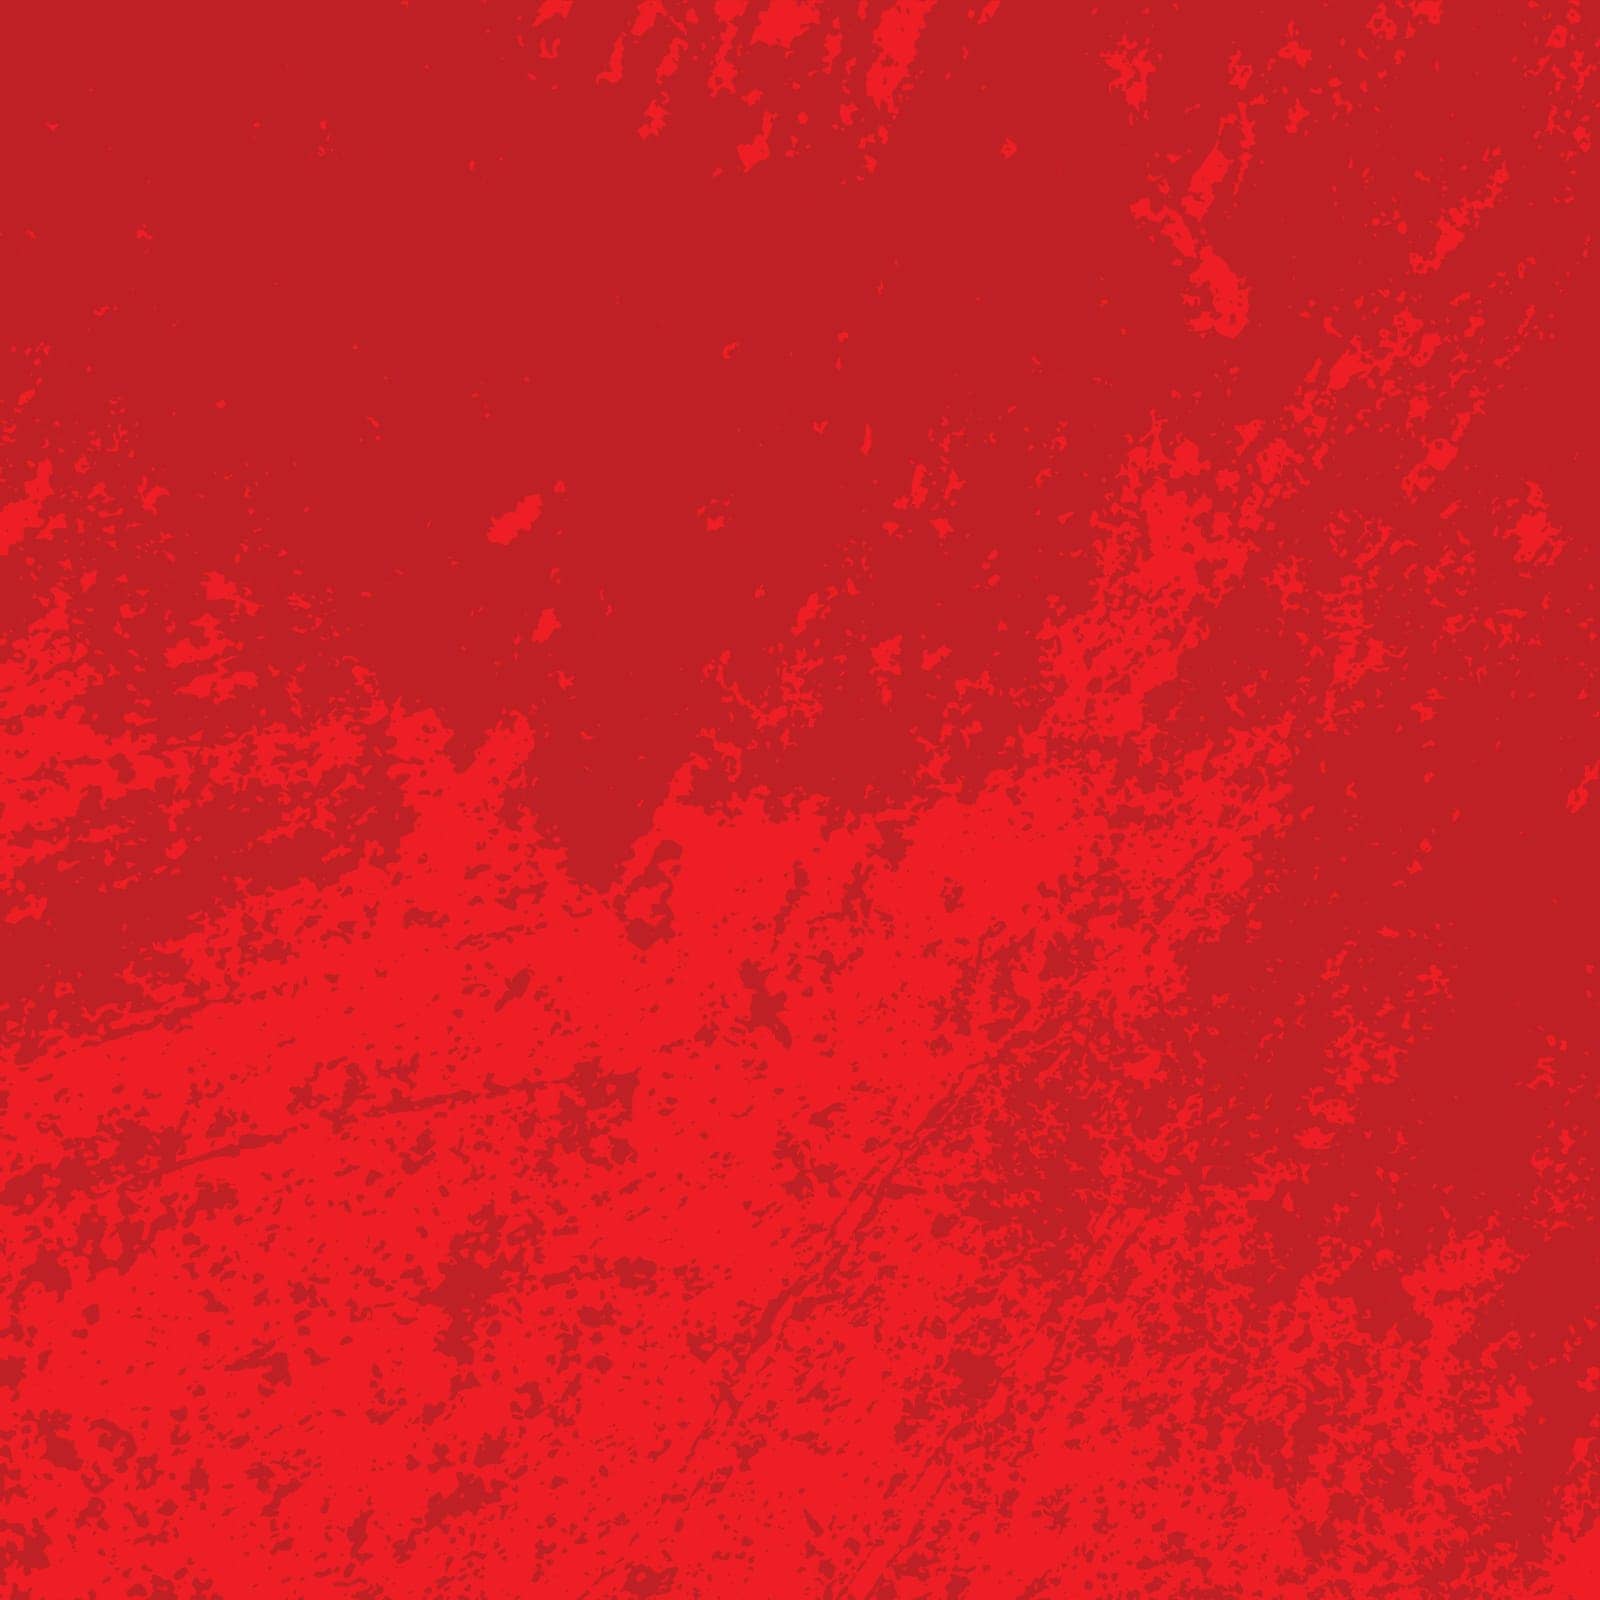 Distress Red Texture by benjaminlion